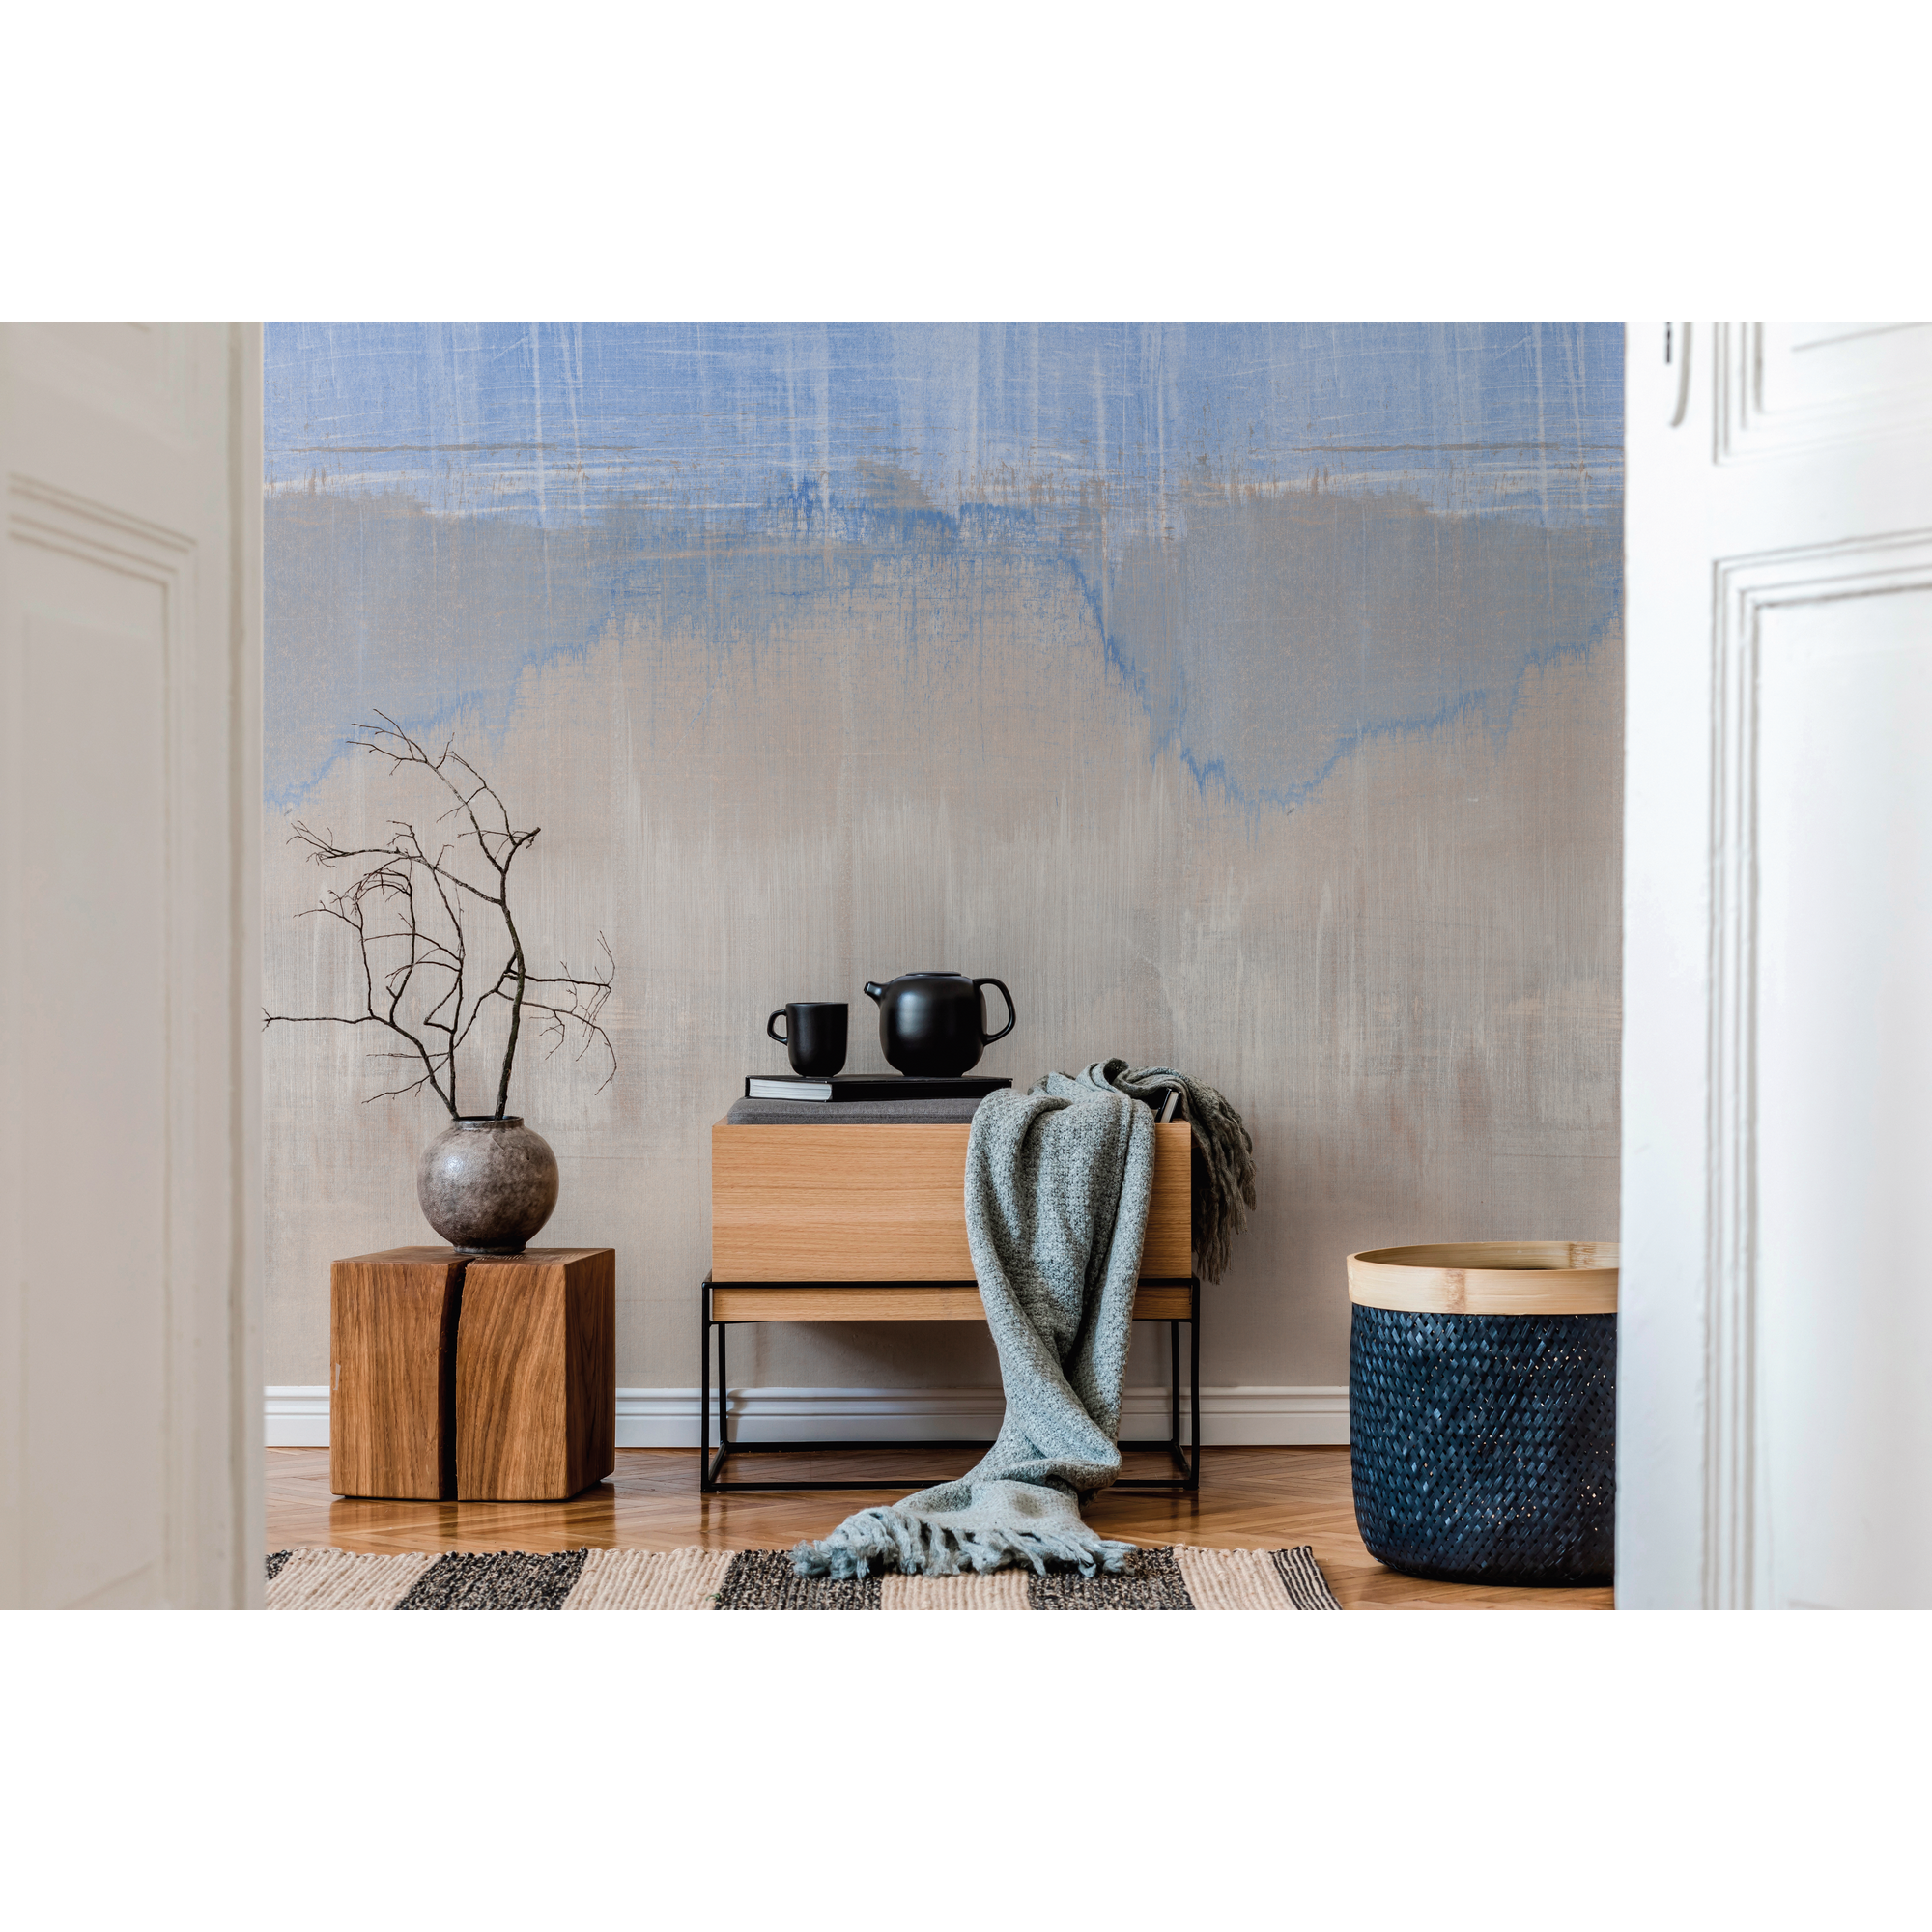 Vliestapete 'The Wall II' Abstrakte Wand blau 4-teilig 212 x 280 cm + product picture